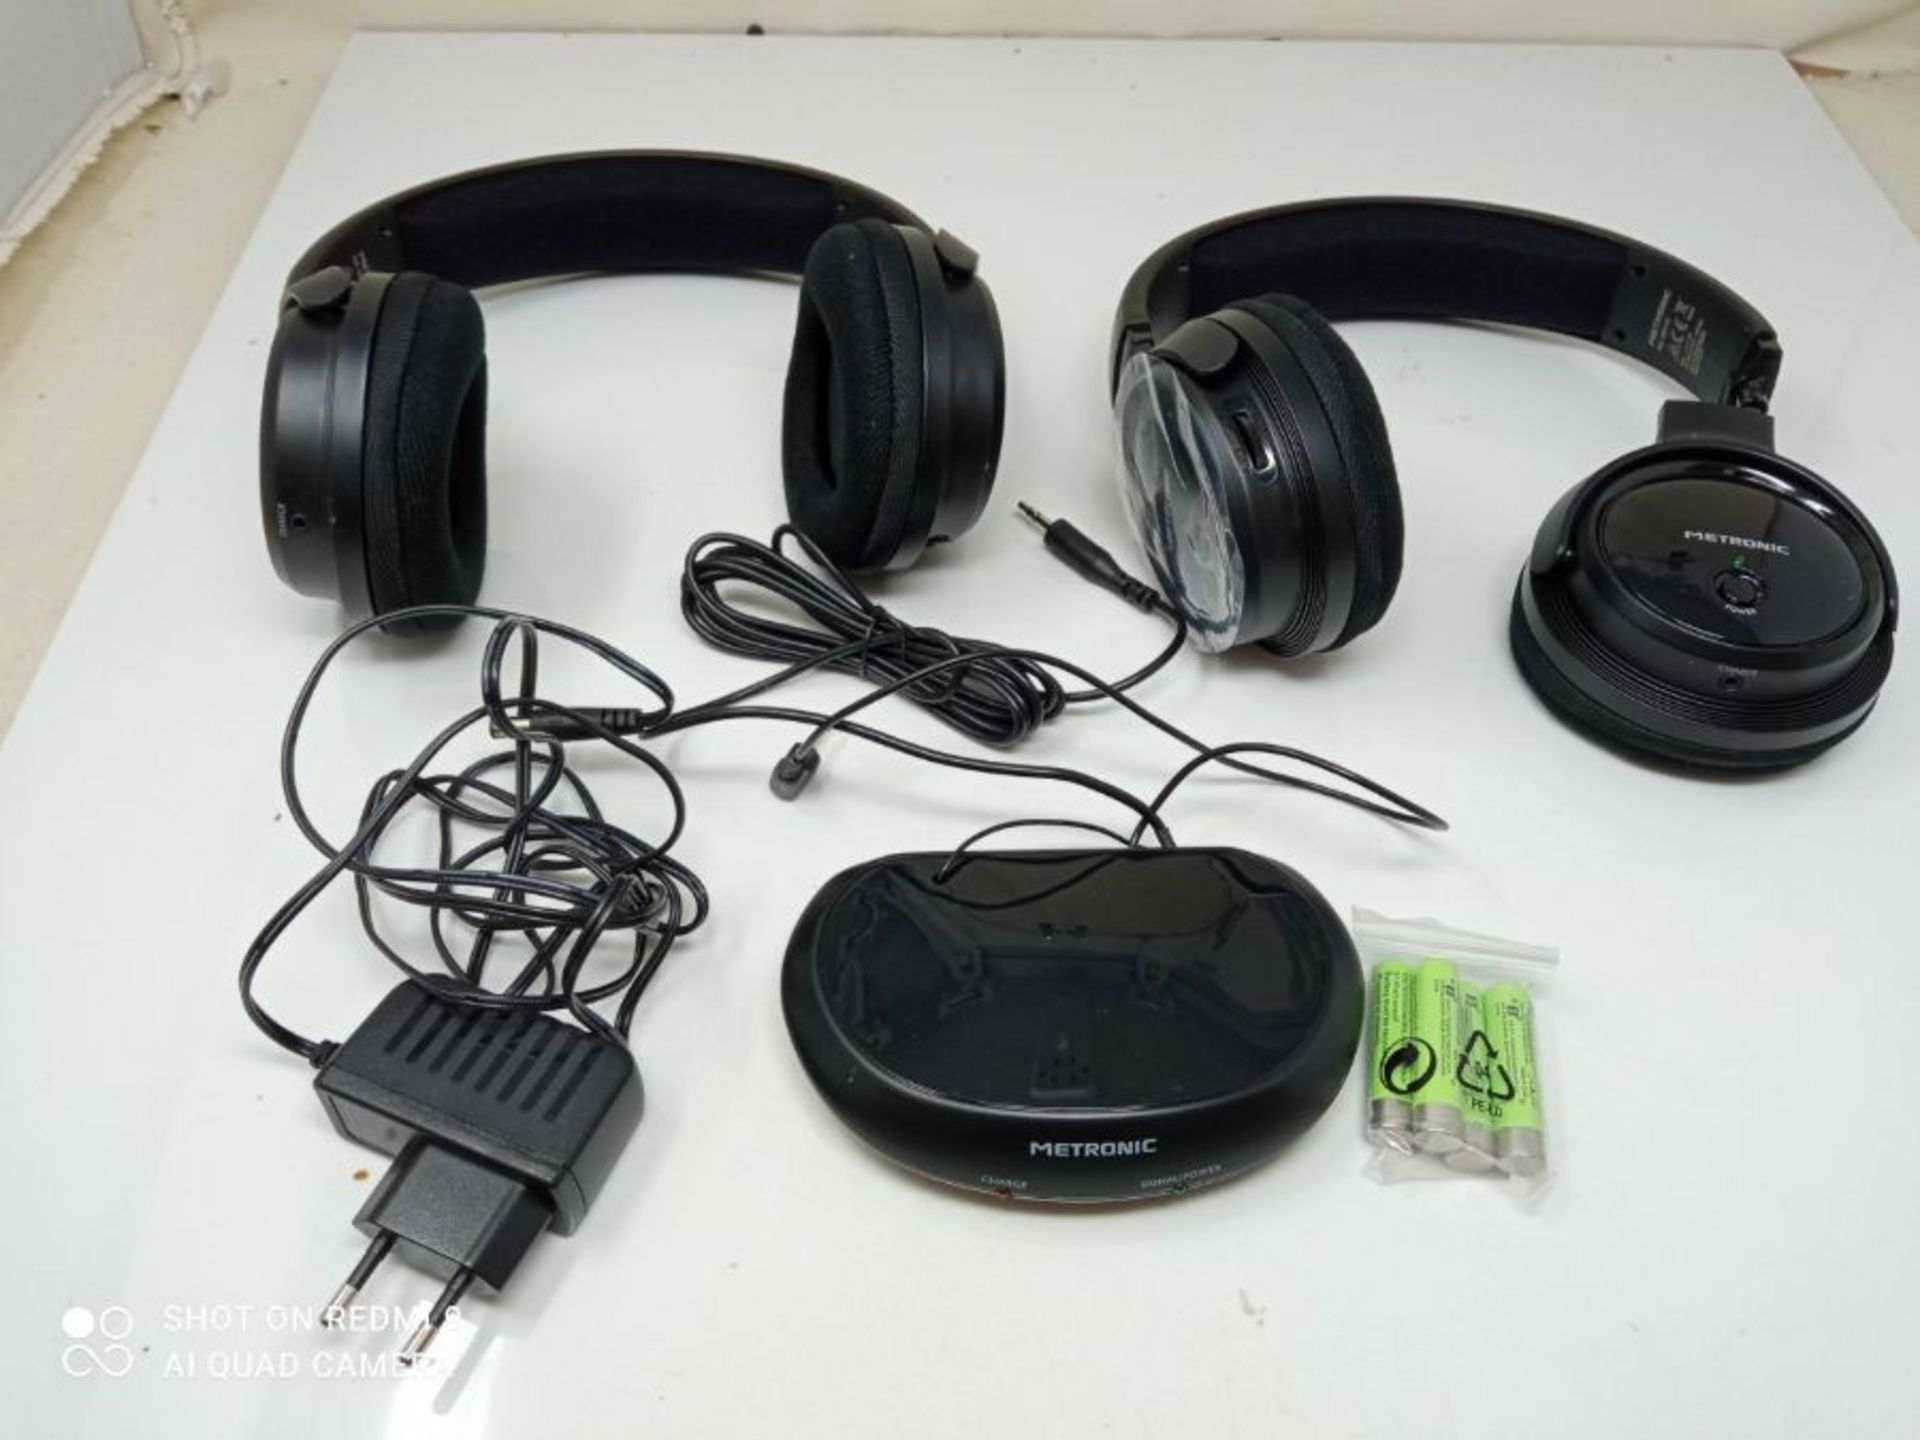 RRP £65.00 [CRACKED] Metronic 480182 TV Duo Wireless Stereo Headphones - Black - Image 3 of 3